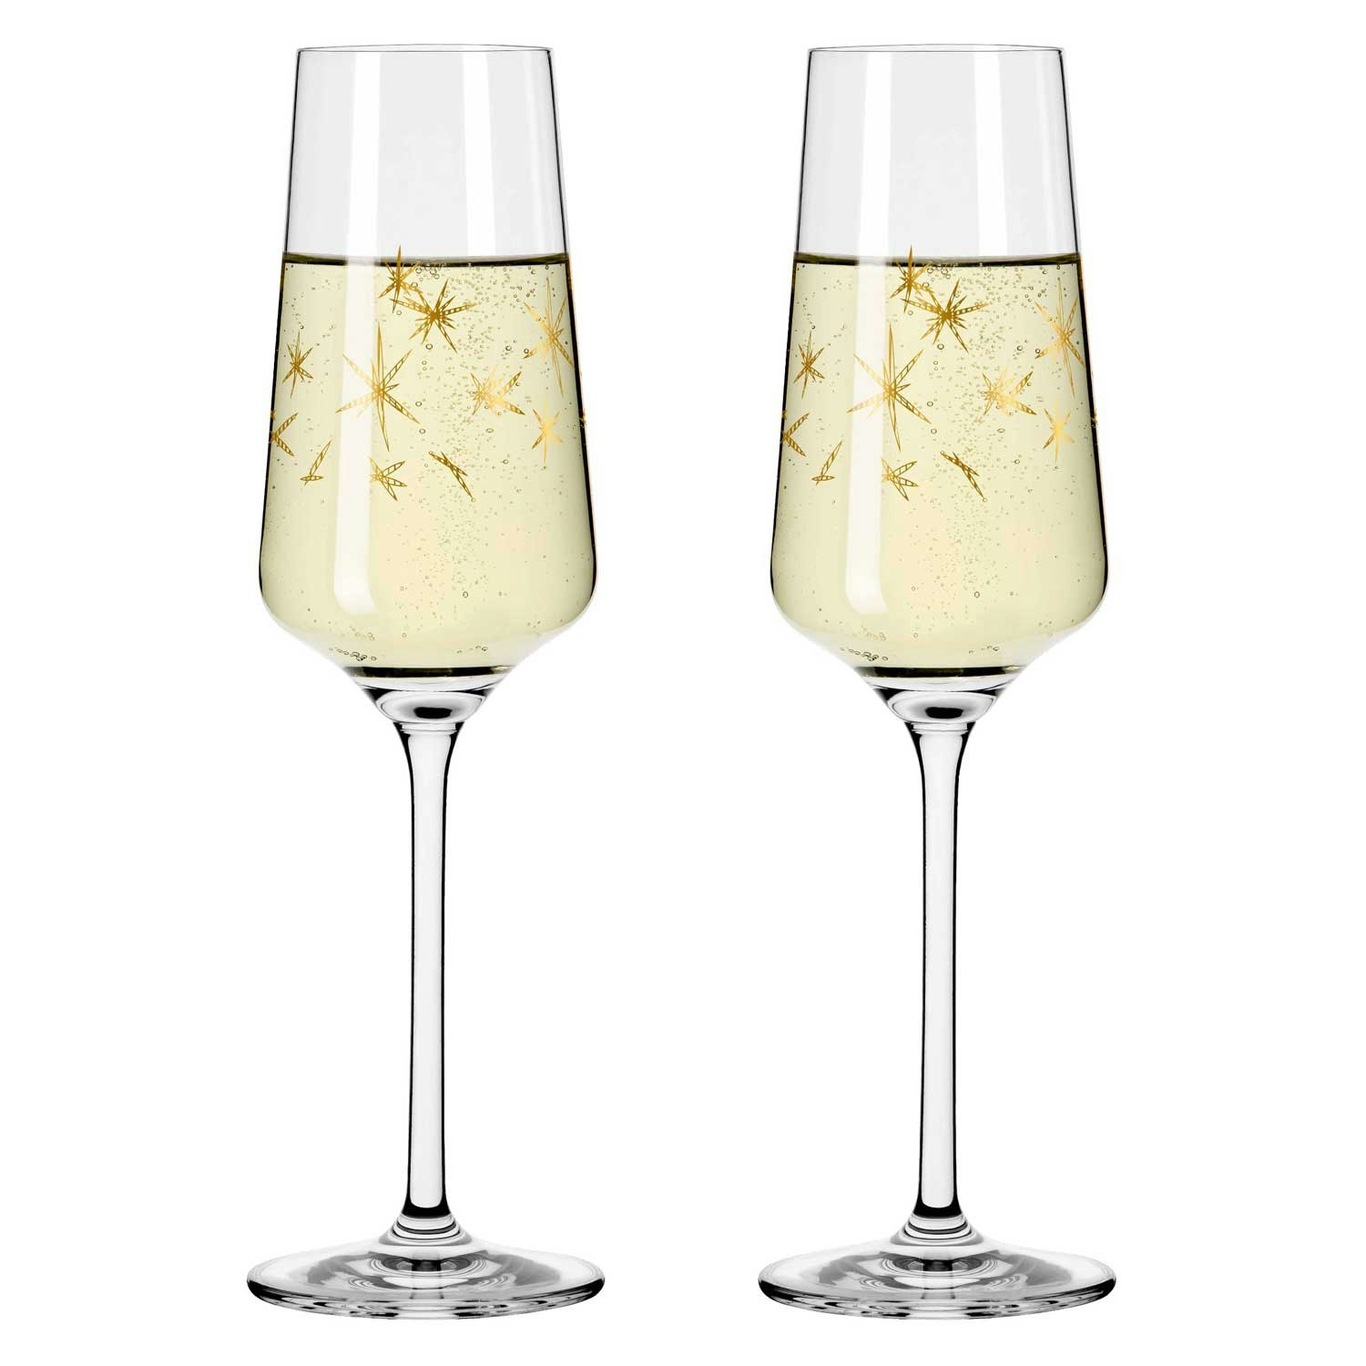 https://royaldesign.com/image/2/ritzenhoff-celebration-deluxe-champagne-glass-stars-2-pack-23-cl-0?w=800&quality=80